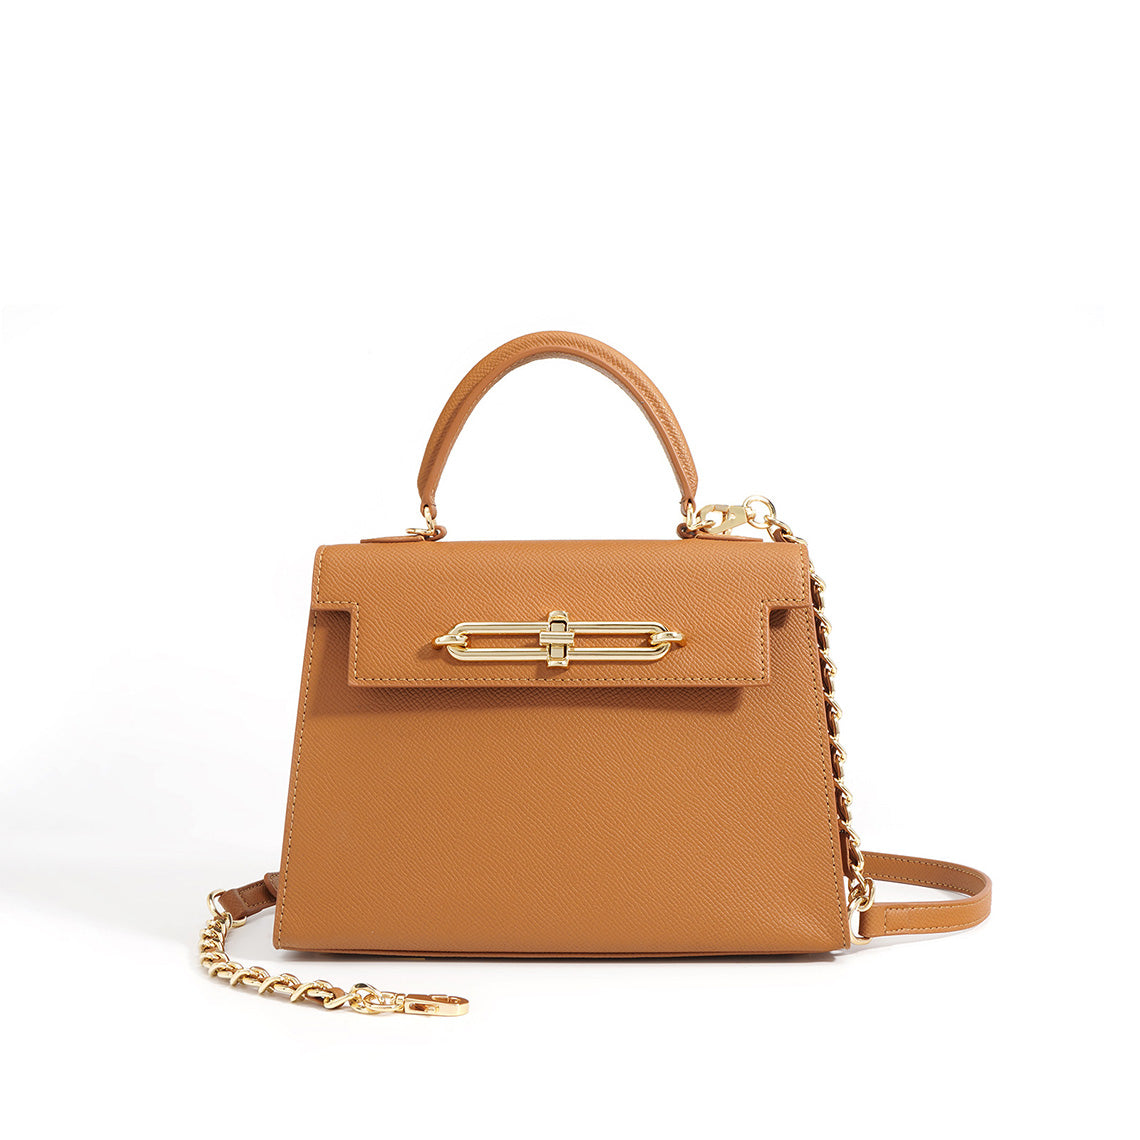 Leather Women Fashion Handbag